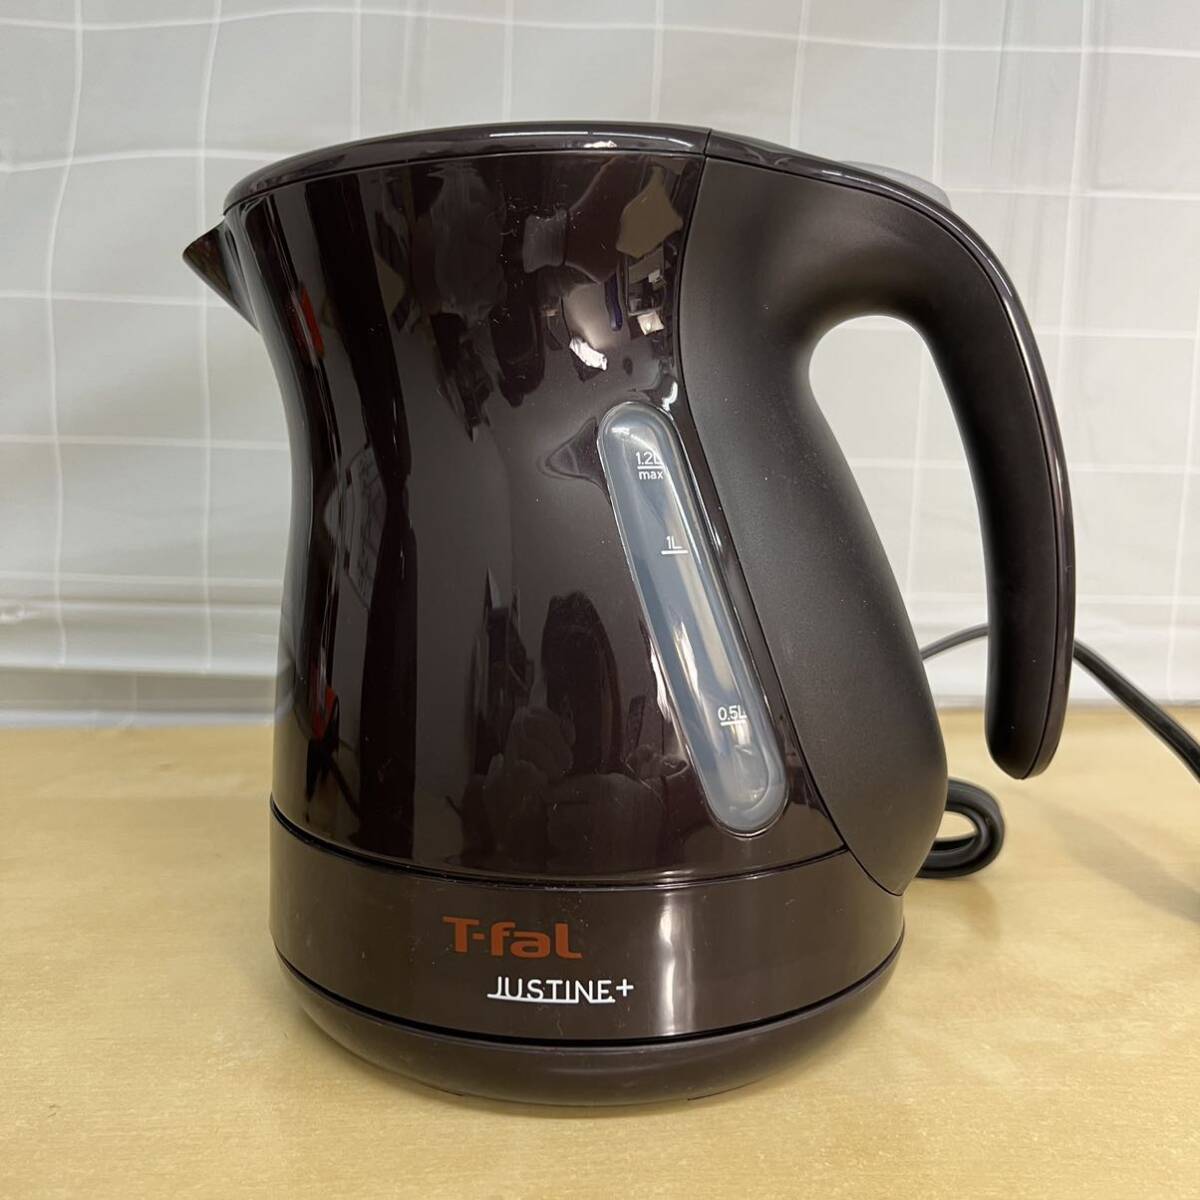 ti fur ru electric kettle [kakao black ]ti fur ruT-FAL electric kettle Justin plus 1.2L KO3408JP cordless [ free shipping ]